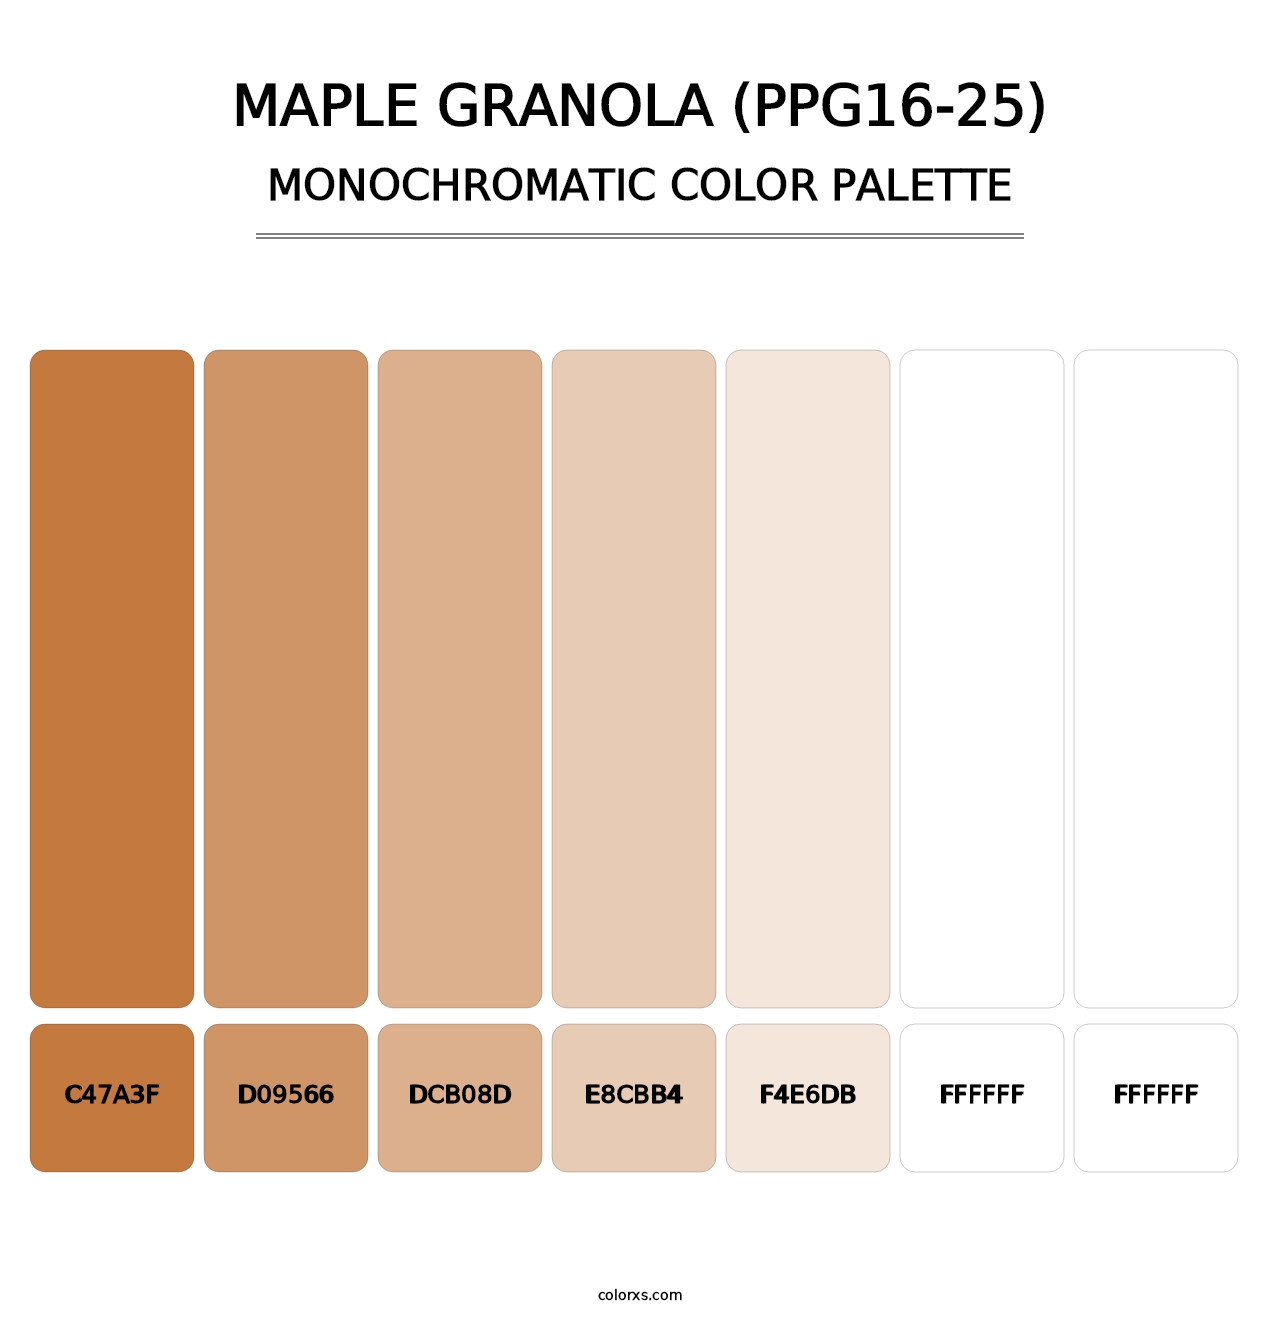 Maple Granola (PPG16-25) - Monochromatic Color Palette